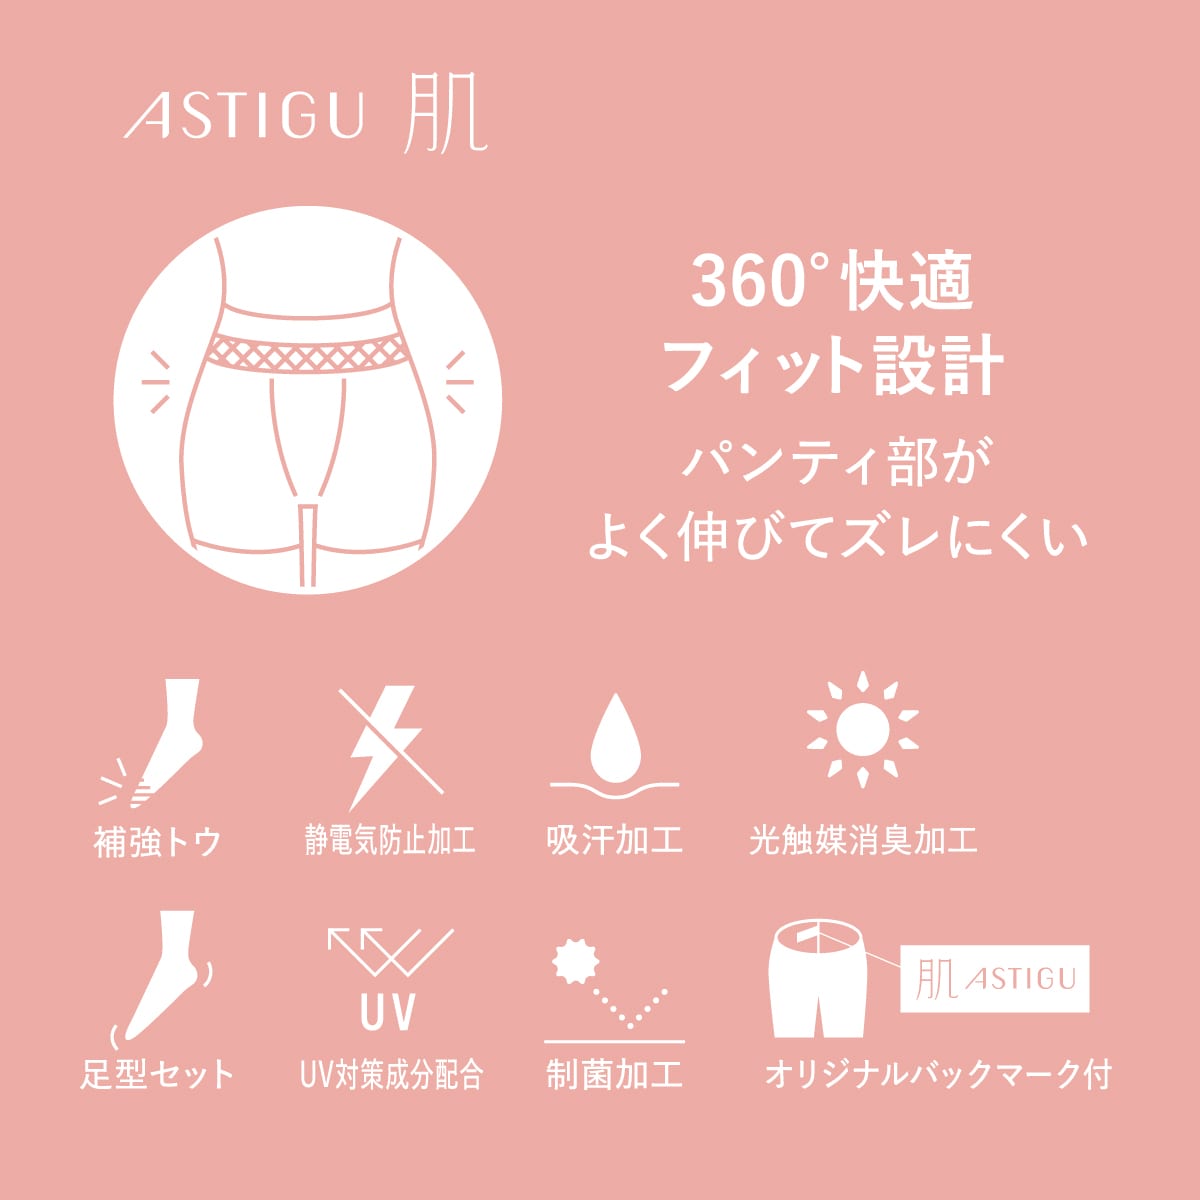 ASTIGU 【肌】自然な素肌感　ゆったり〈JJサイズ〉ストッキング